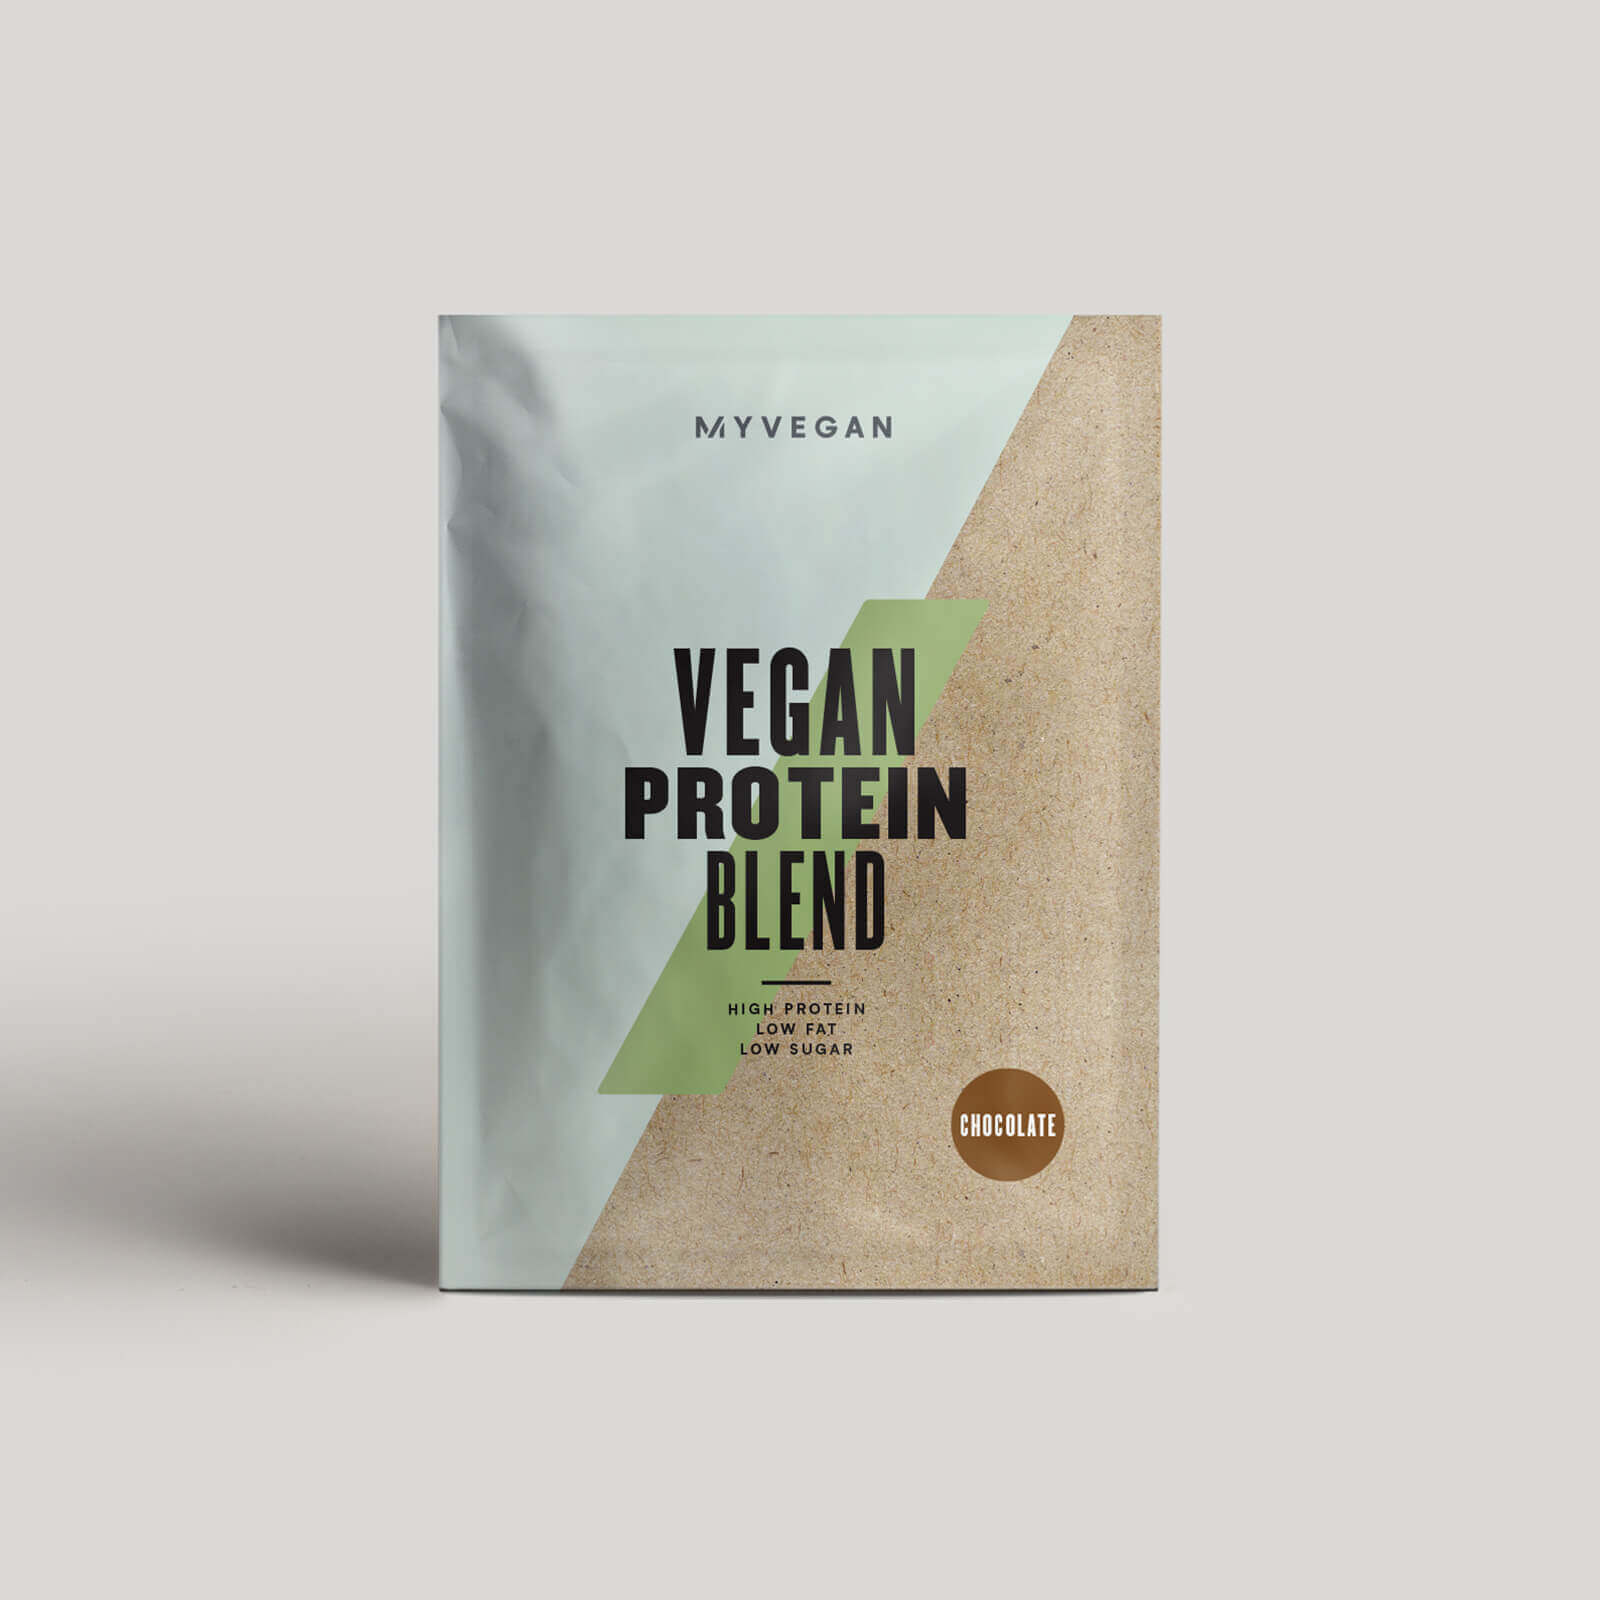 Myvegan Vegan Protein Blend (Sample) - Chocolate